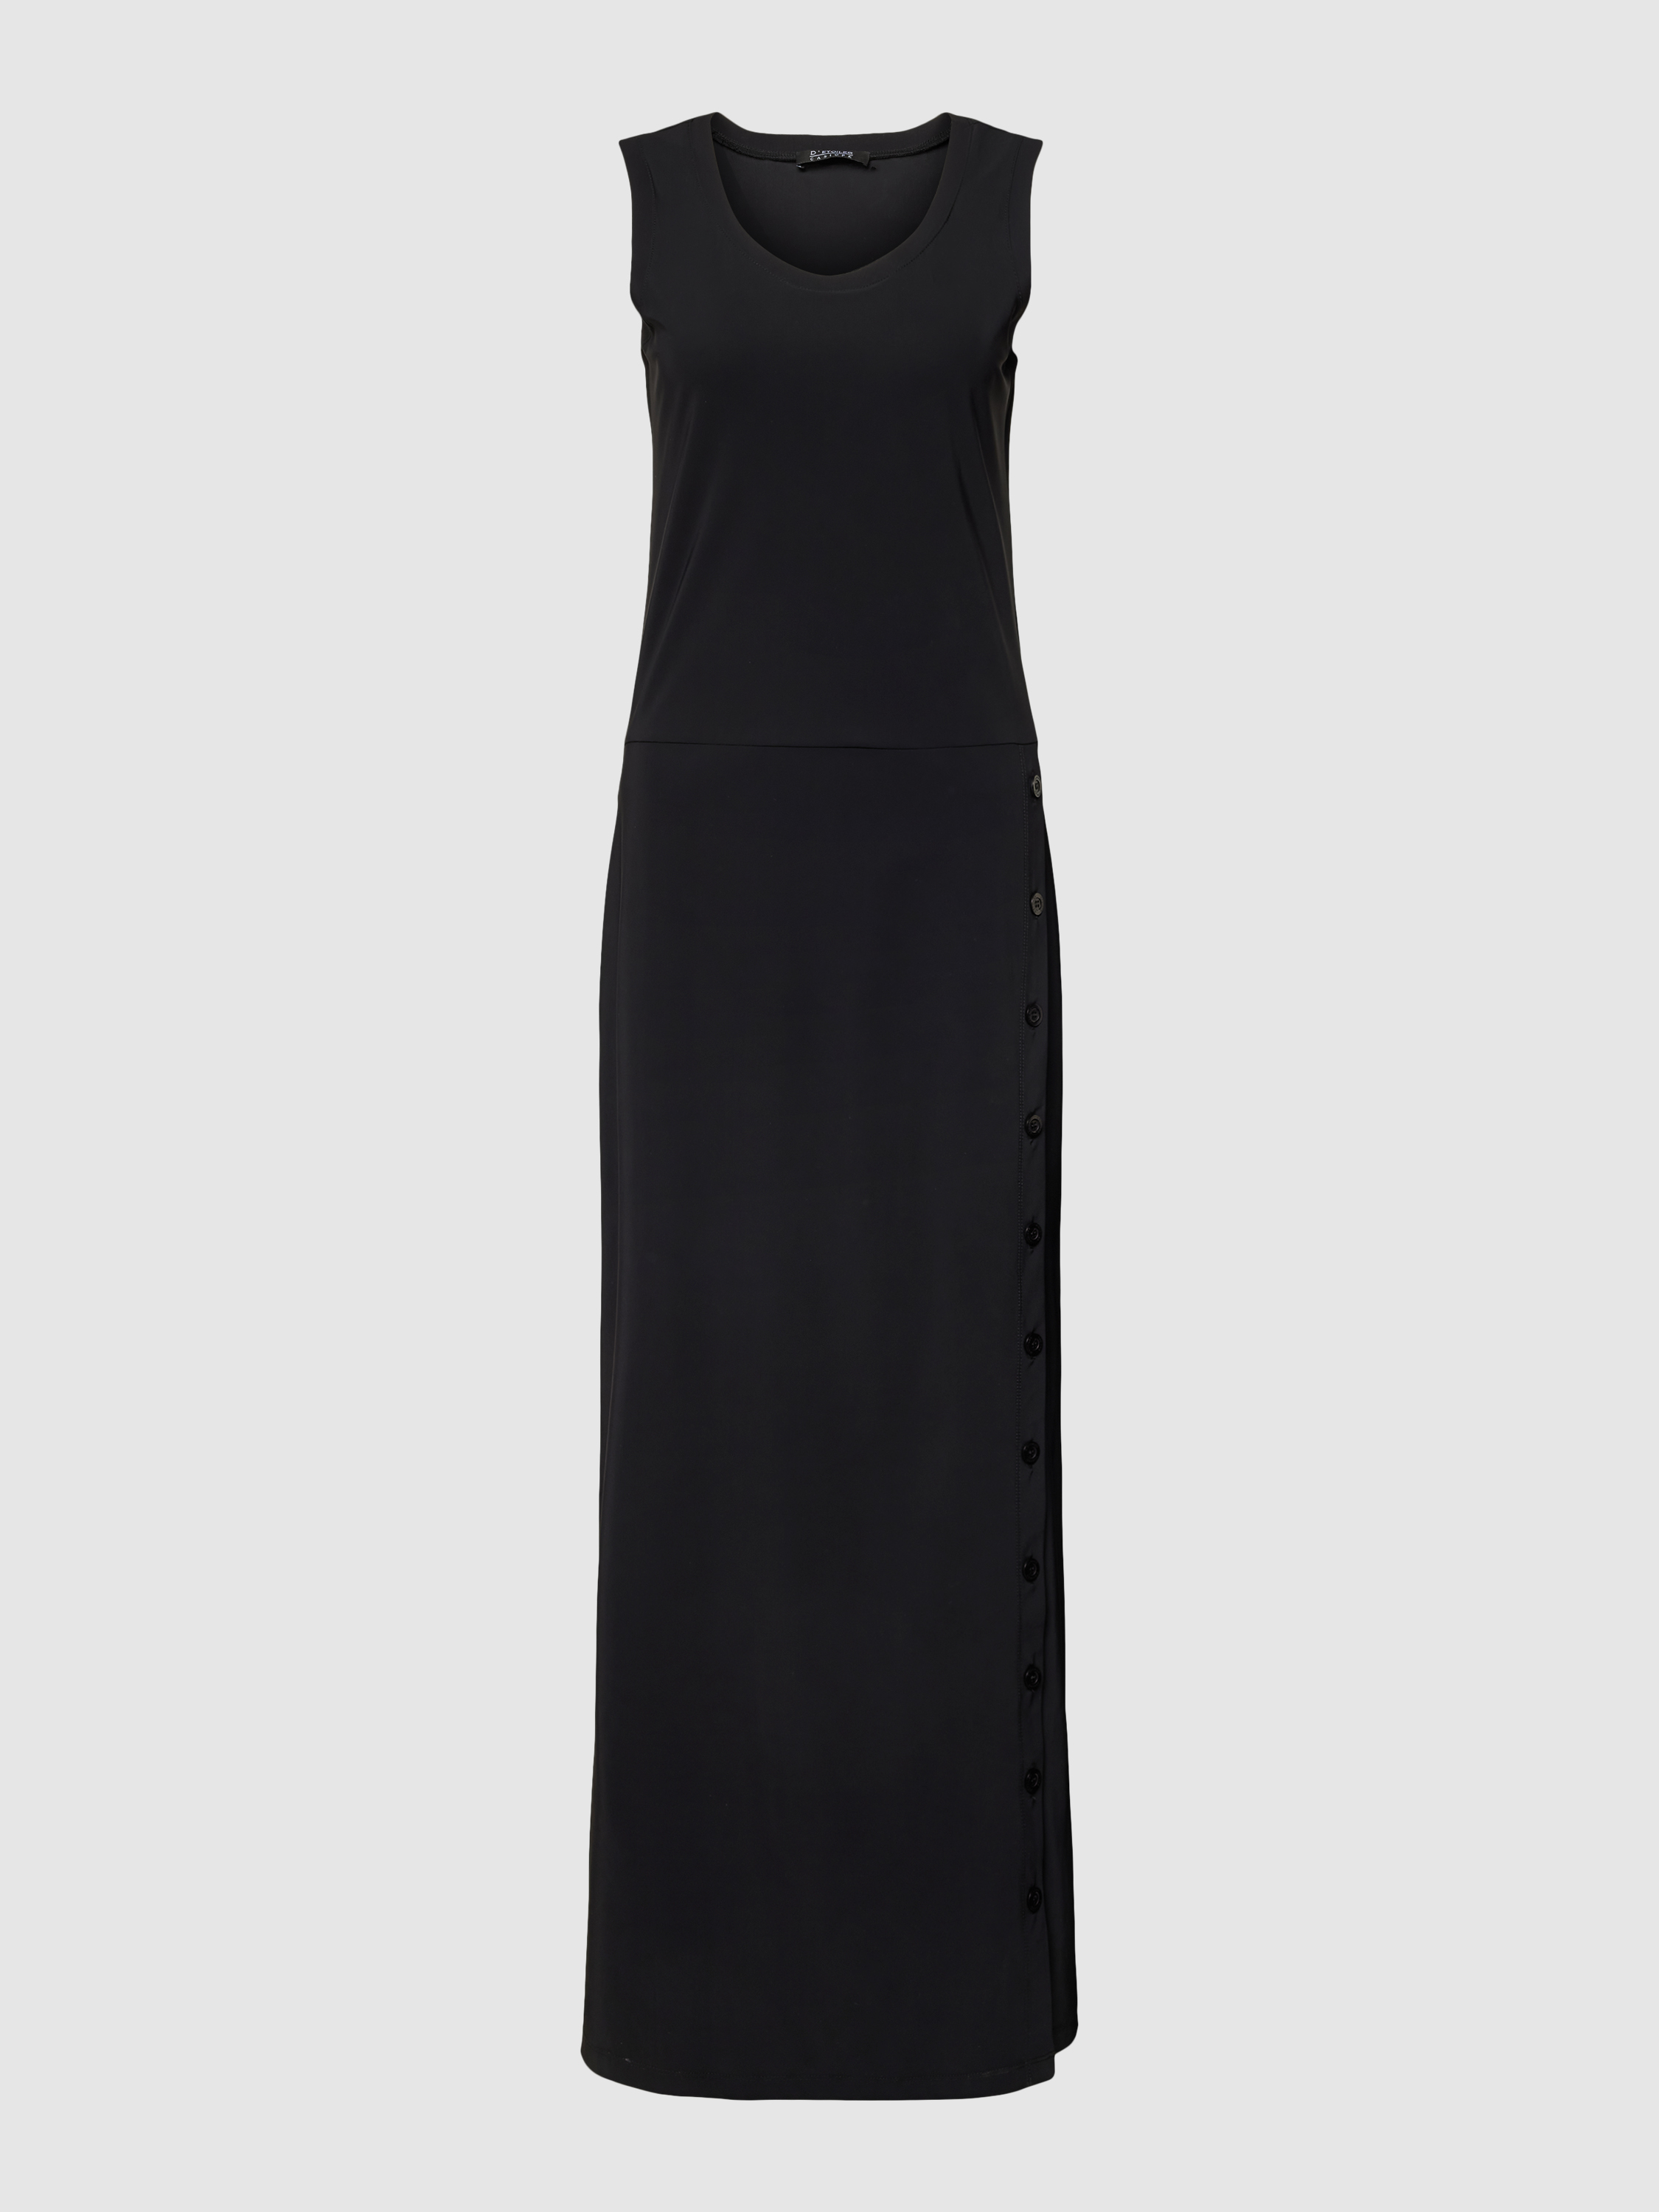 Платье женское D?Etoiles Casiope 1831749 черное S (доставка из-за рубежа)